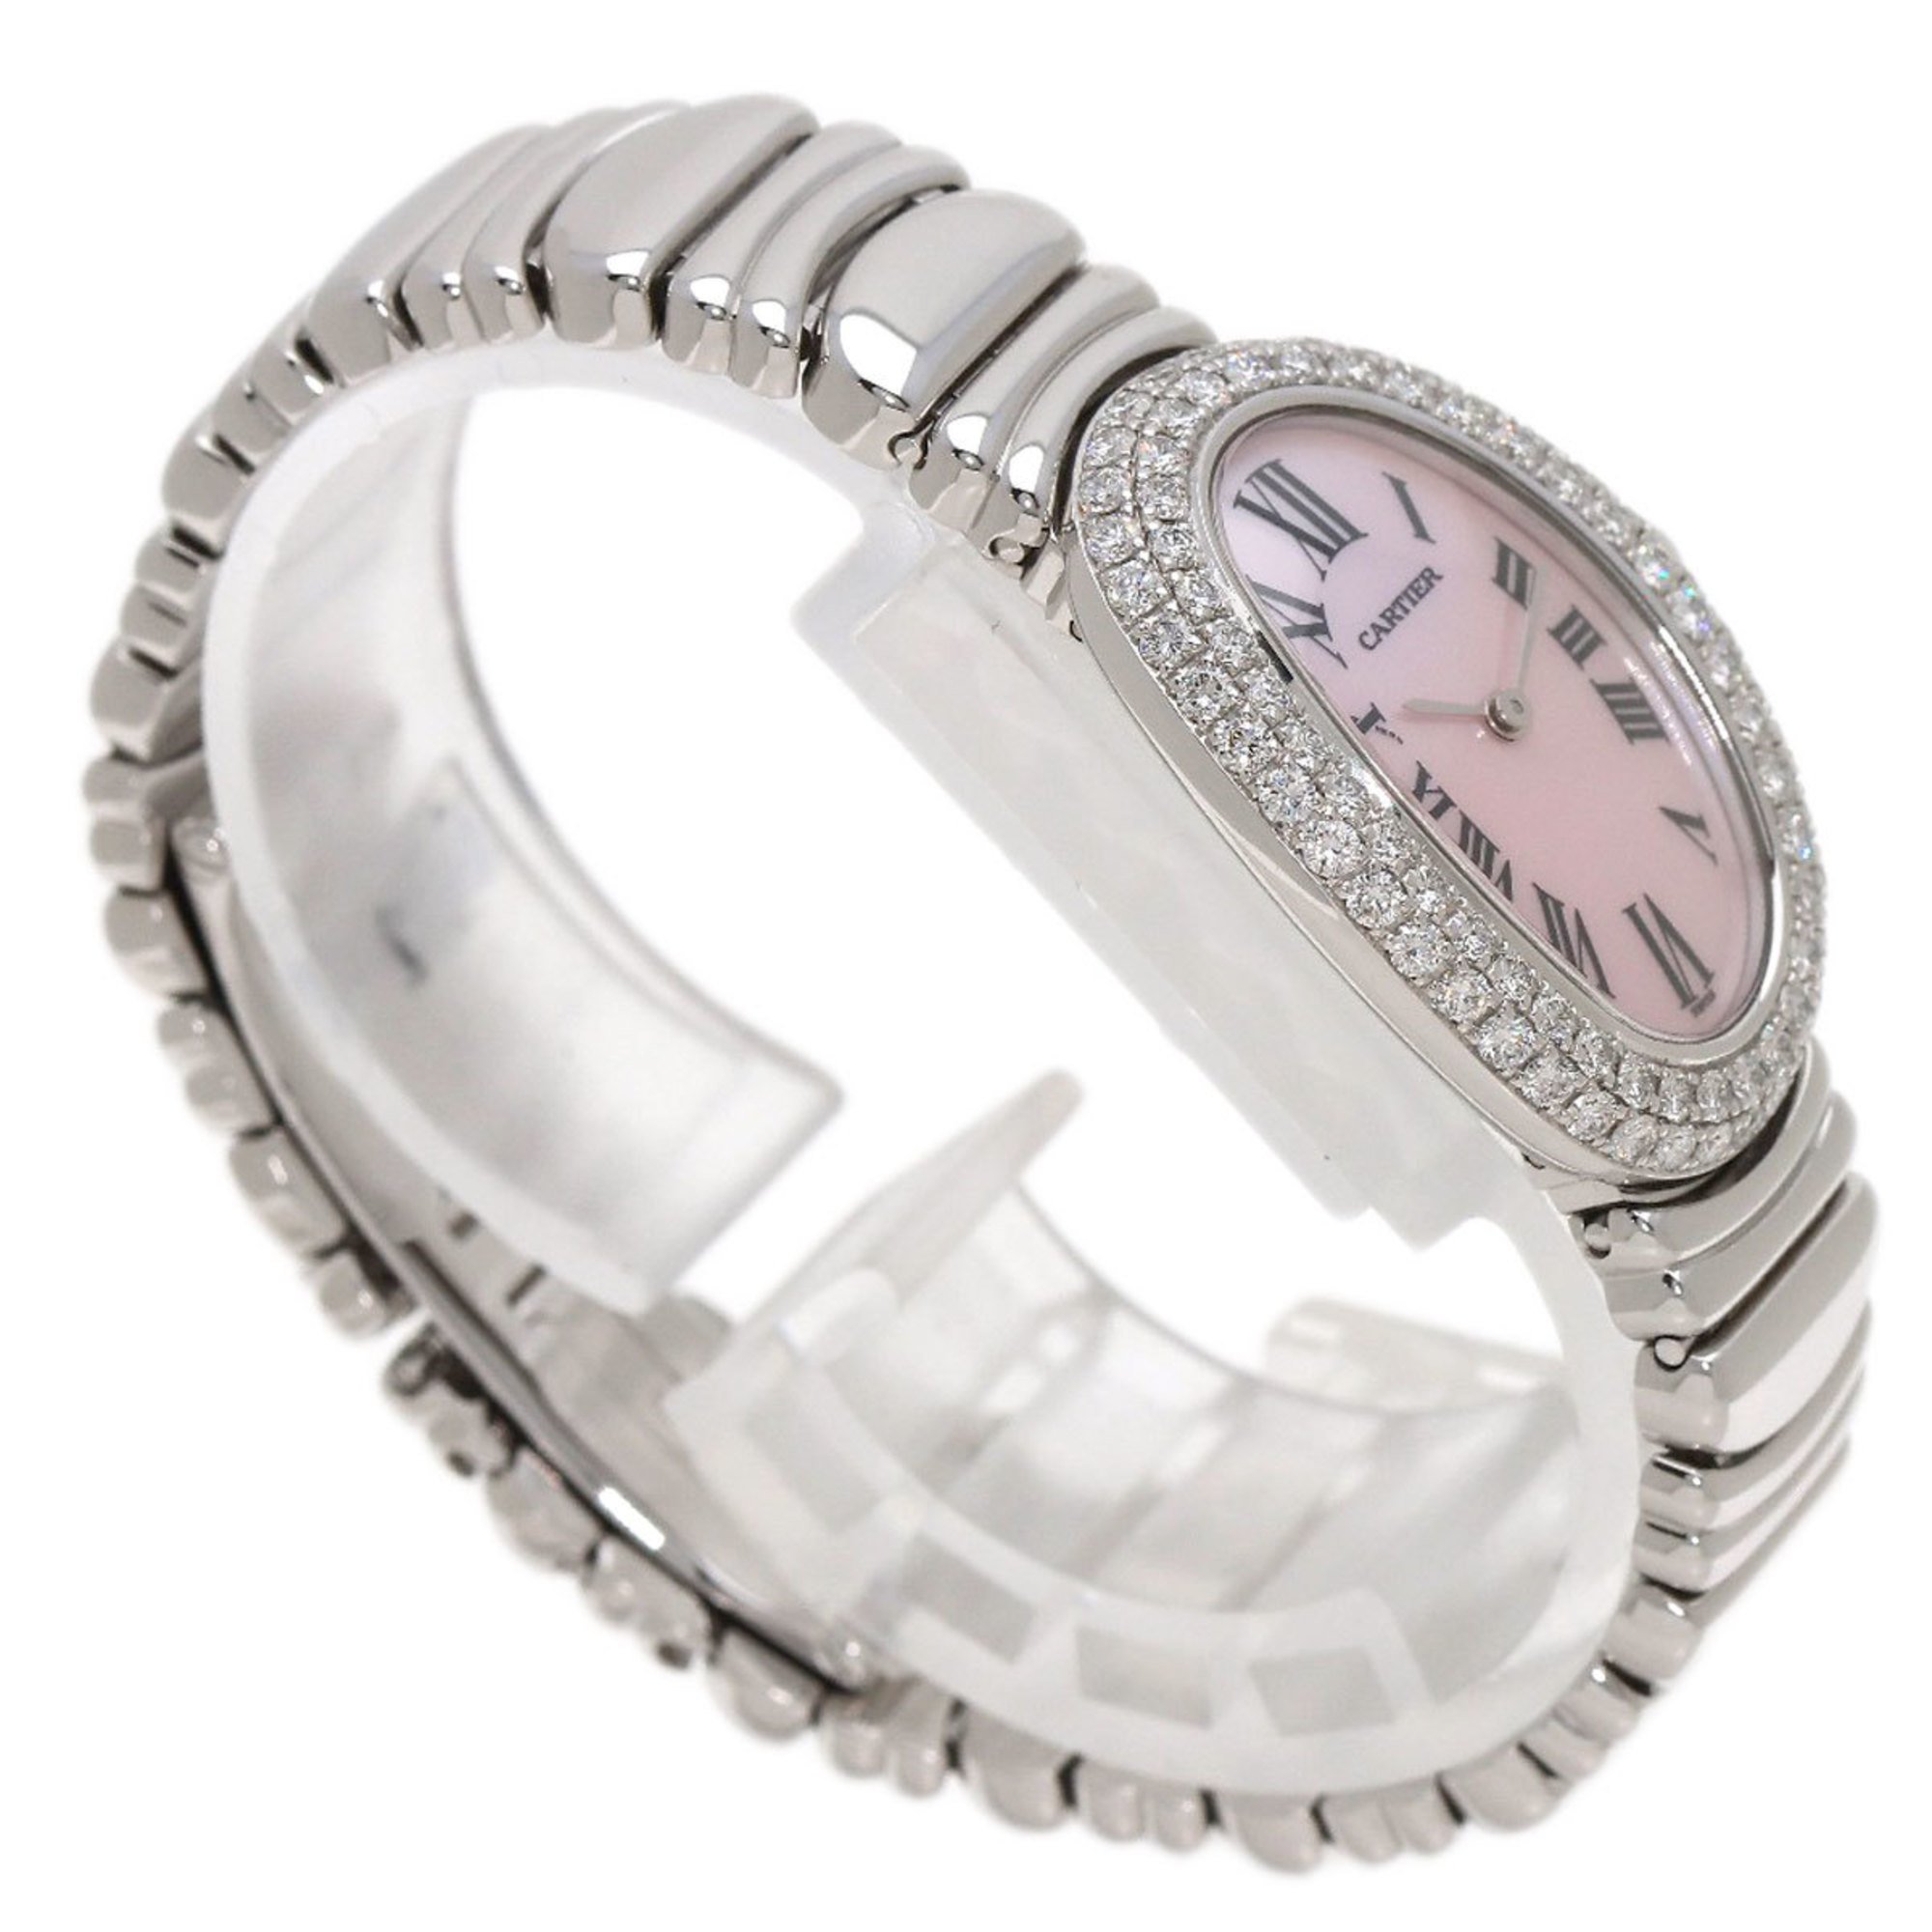 Cartier WB5097L2 Baignoire Bezel Double Diamond Watch K18 White Gold K18WG Ladies